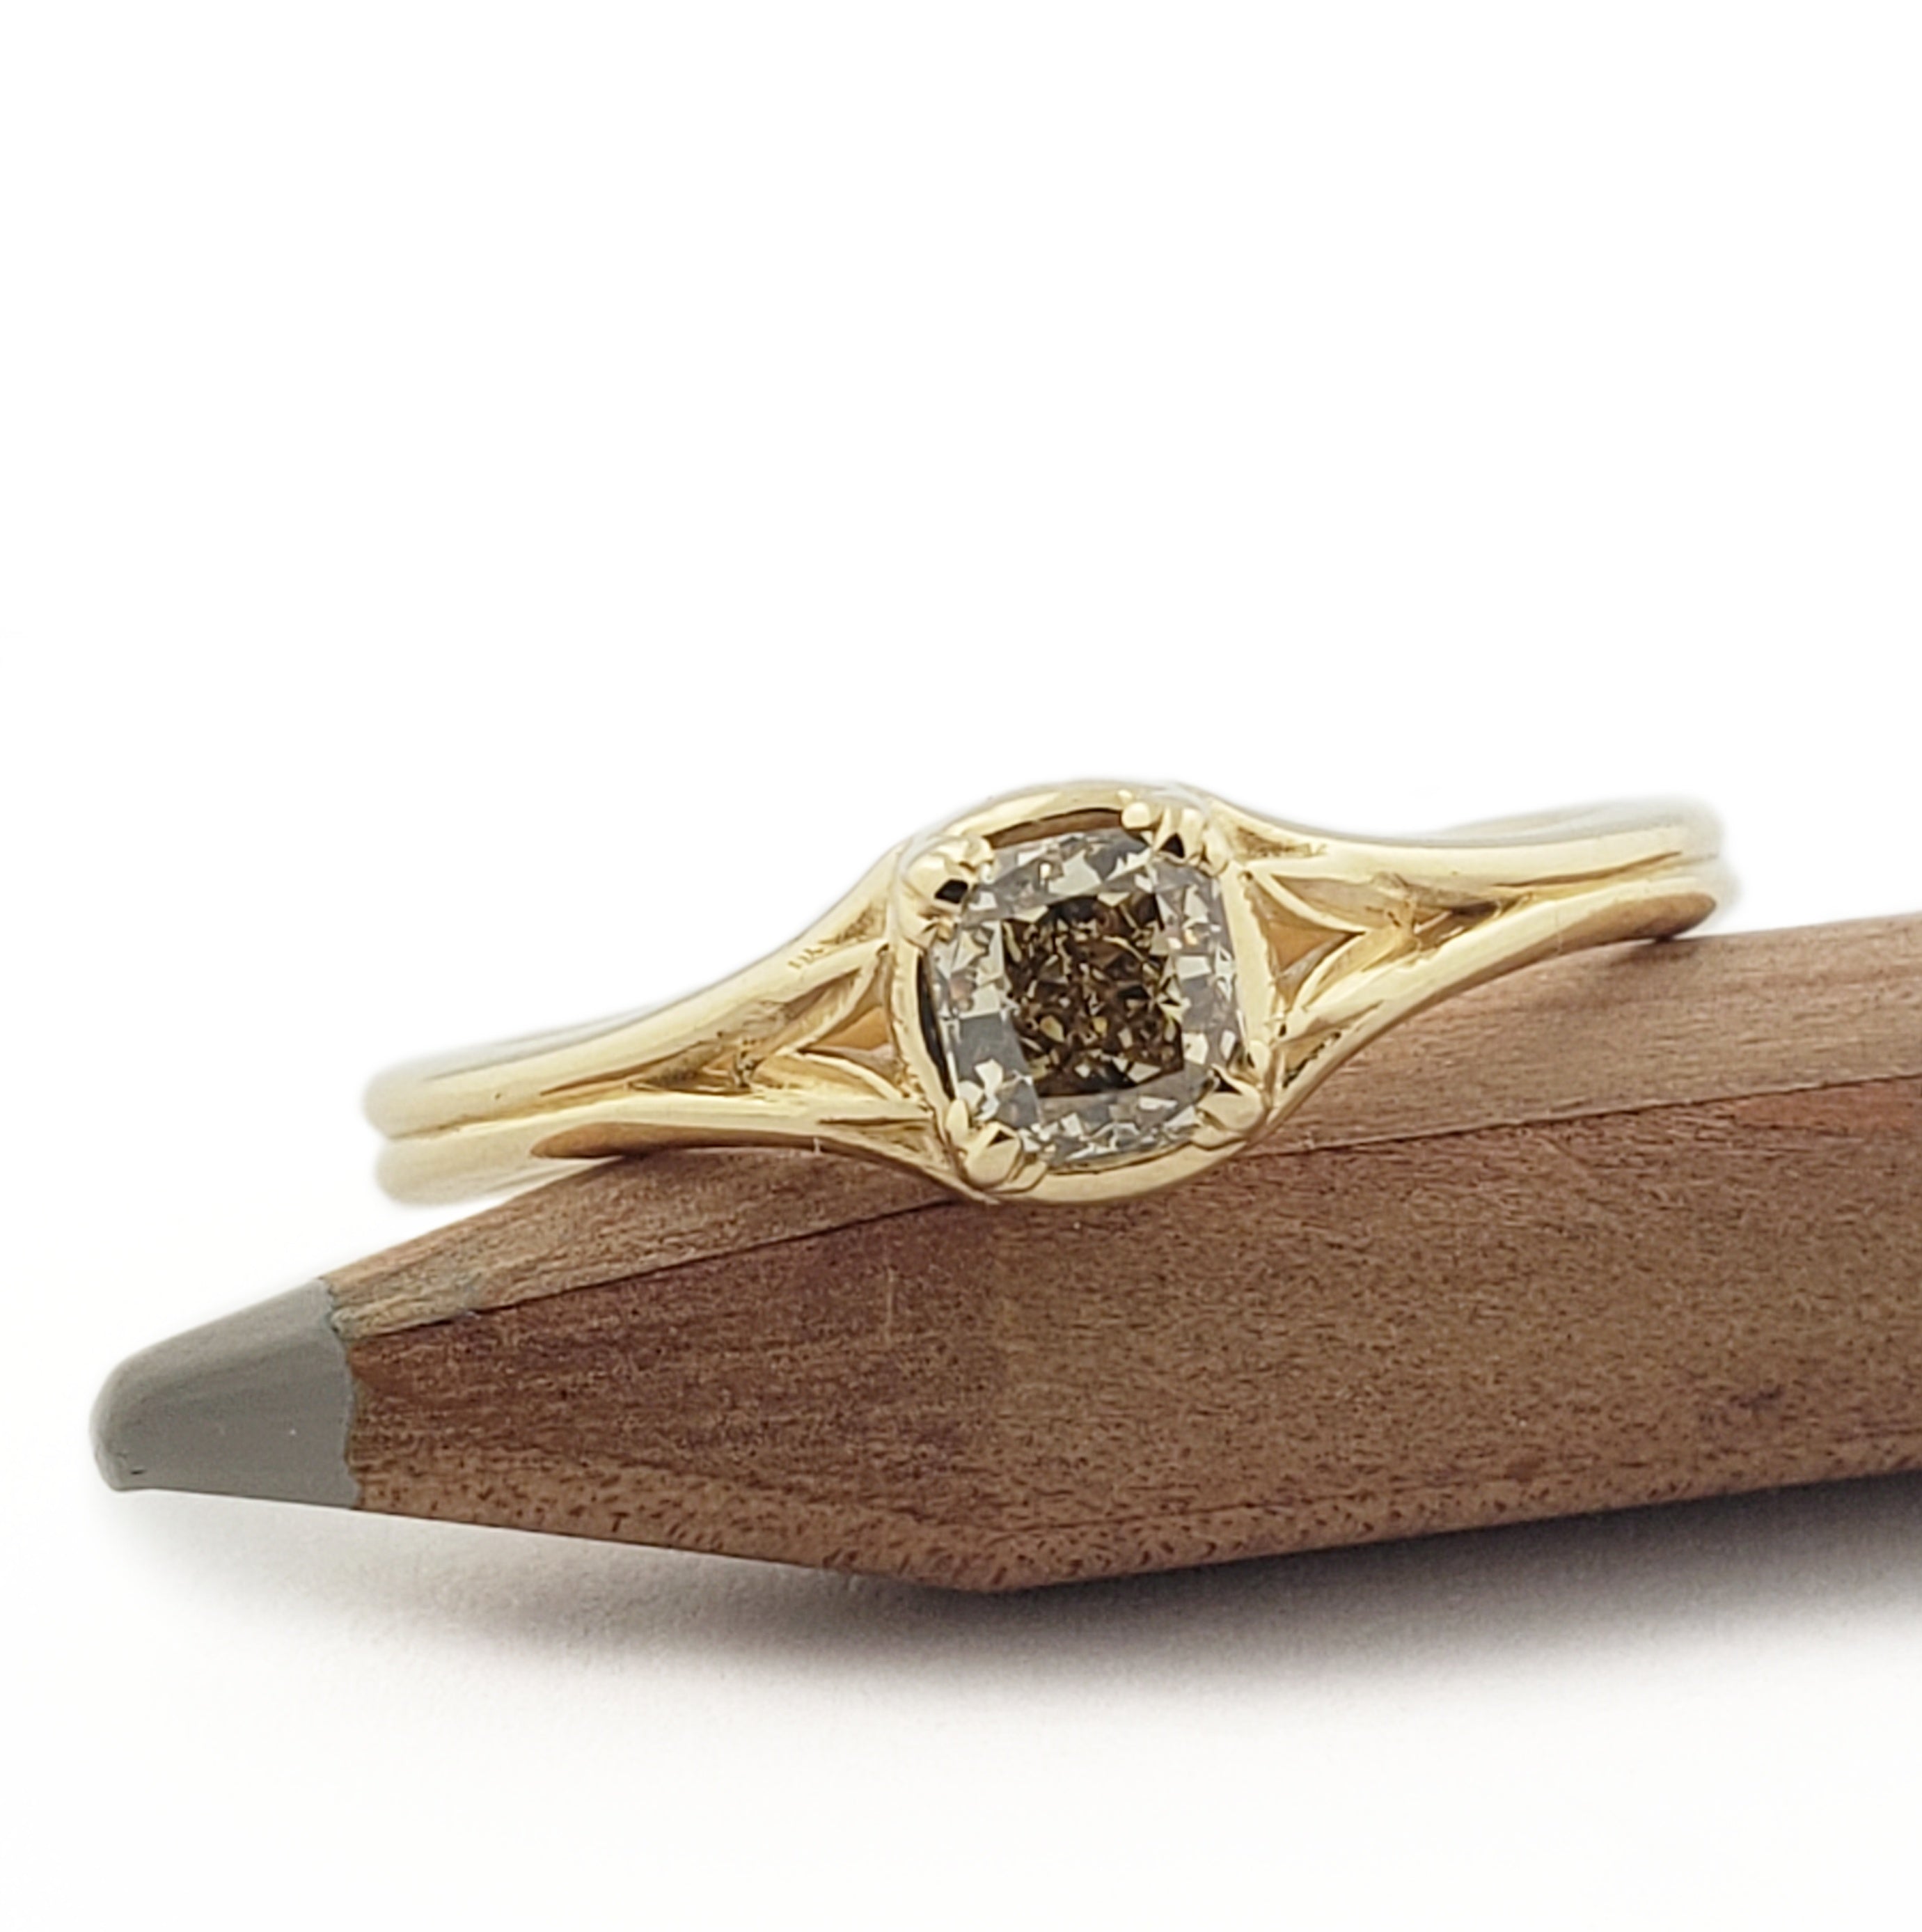 14kt yellow gold Idril engagement ring cushion cut cognac brown diamond solitaire leafy era design  